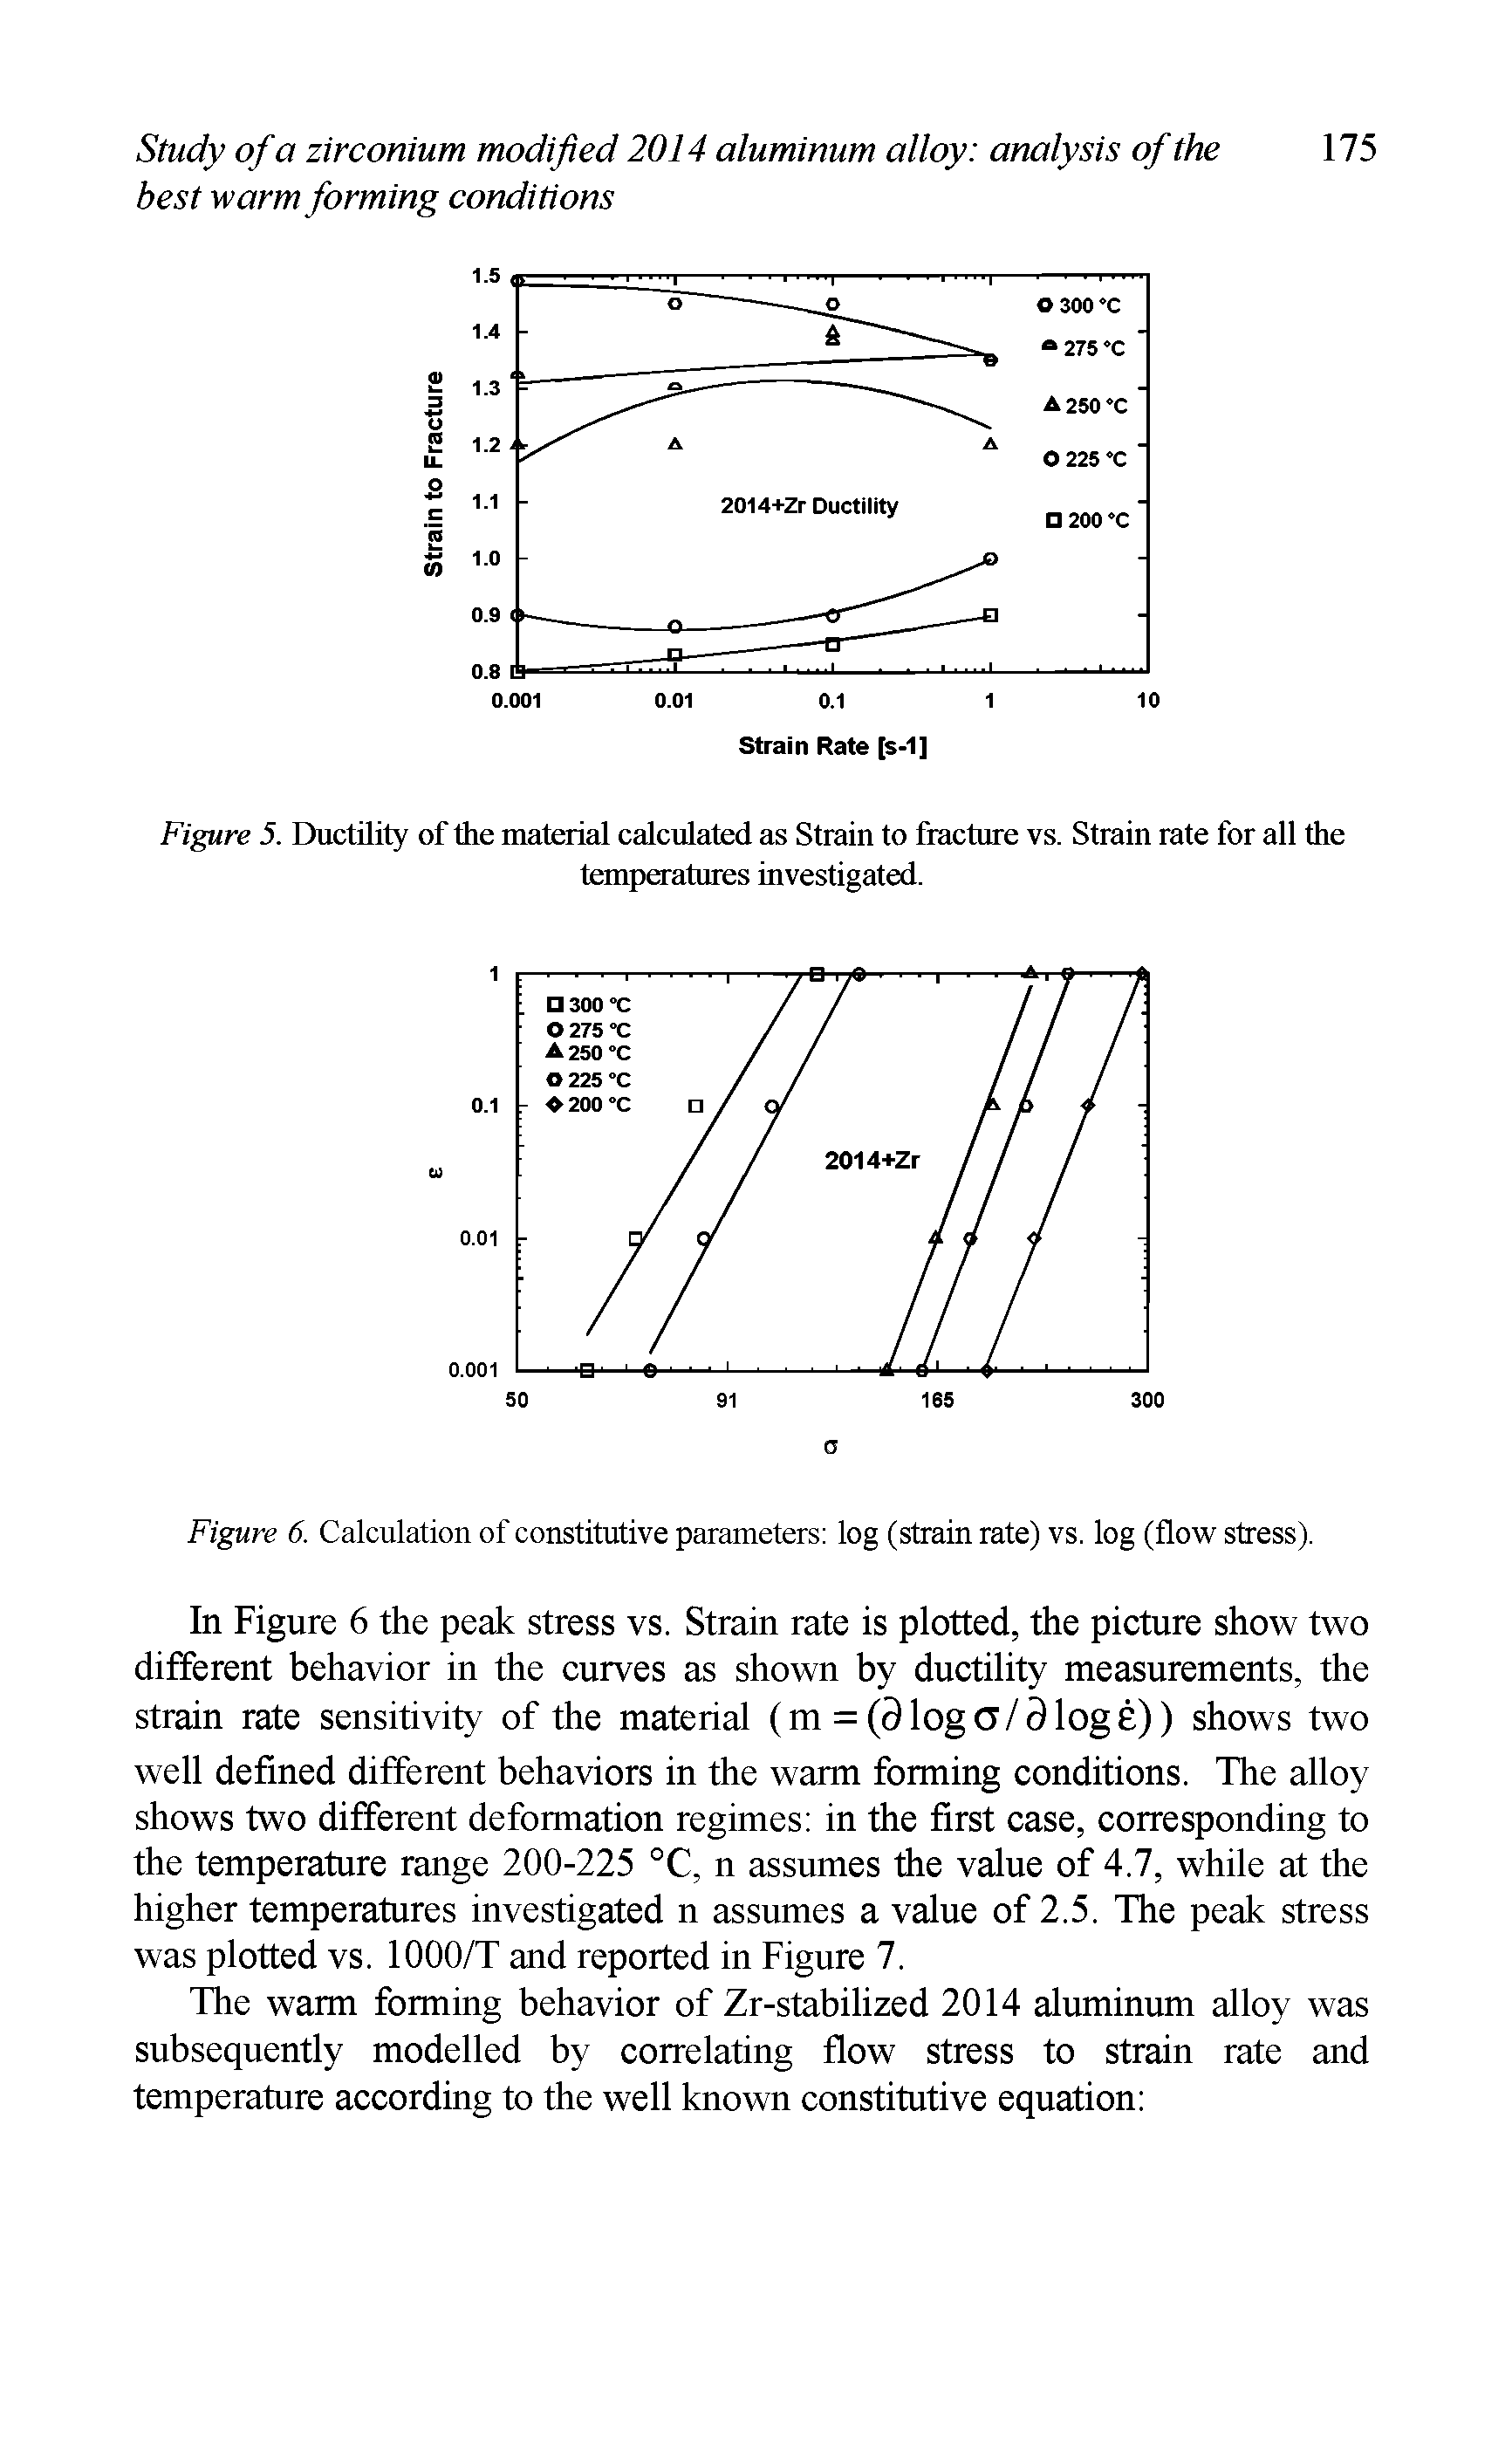 Figure 6. Calculation of constitutive parameters log (strain rate) vs. log (flow stress).